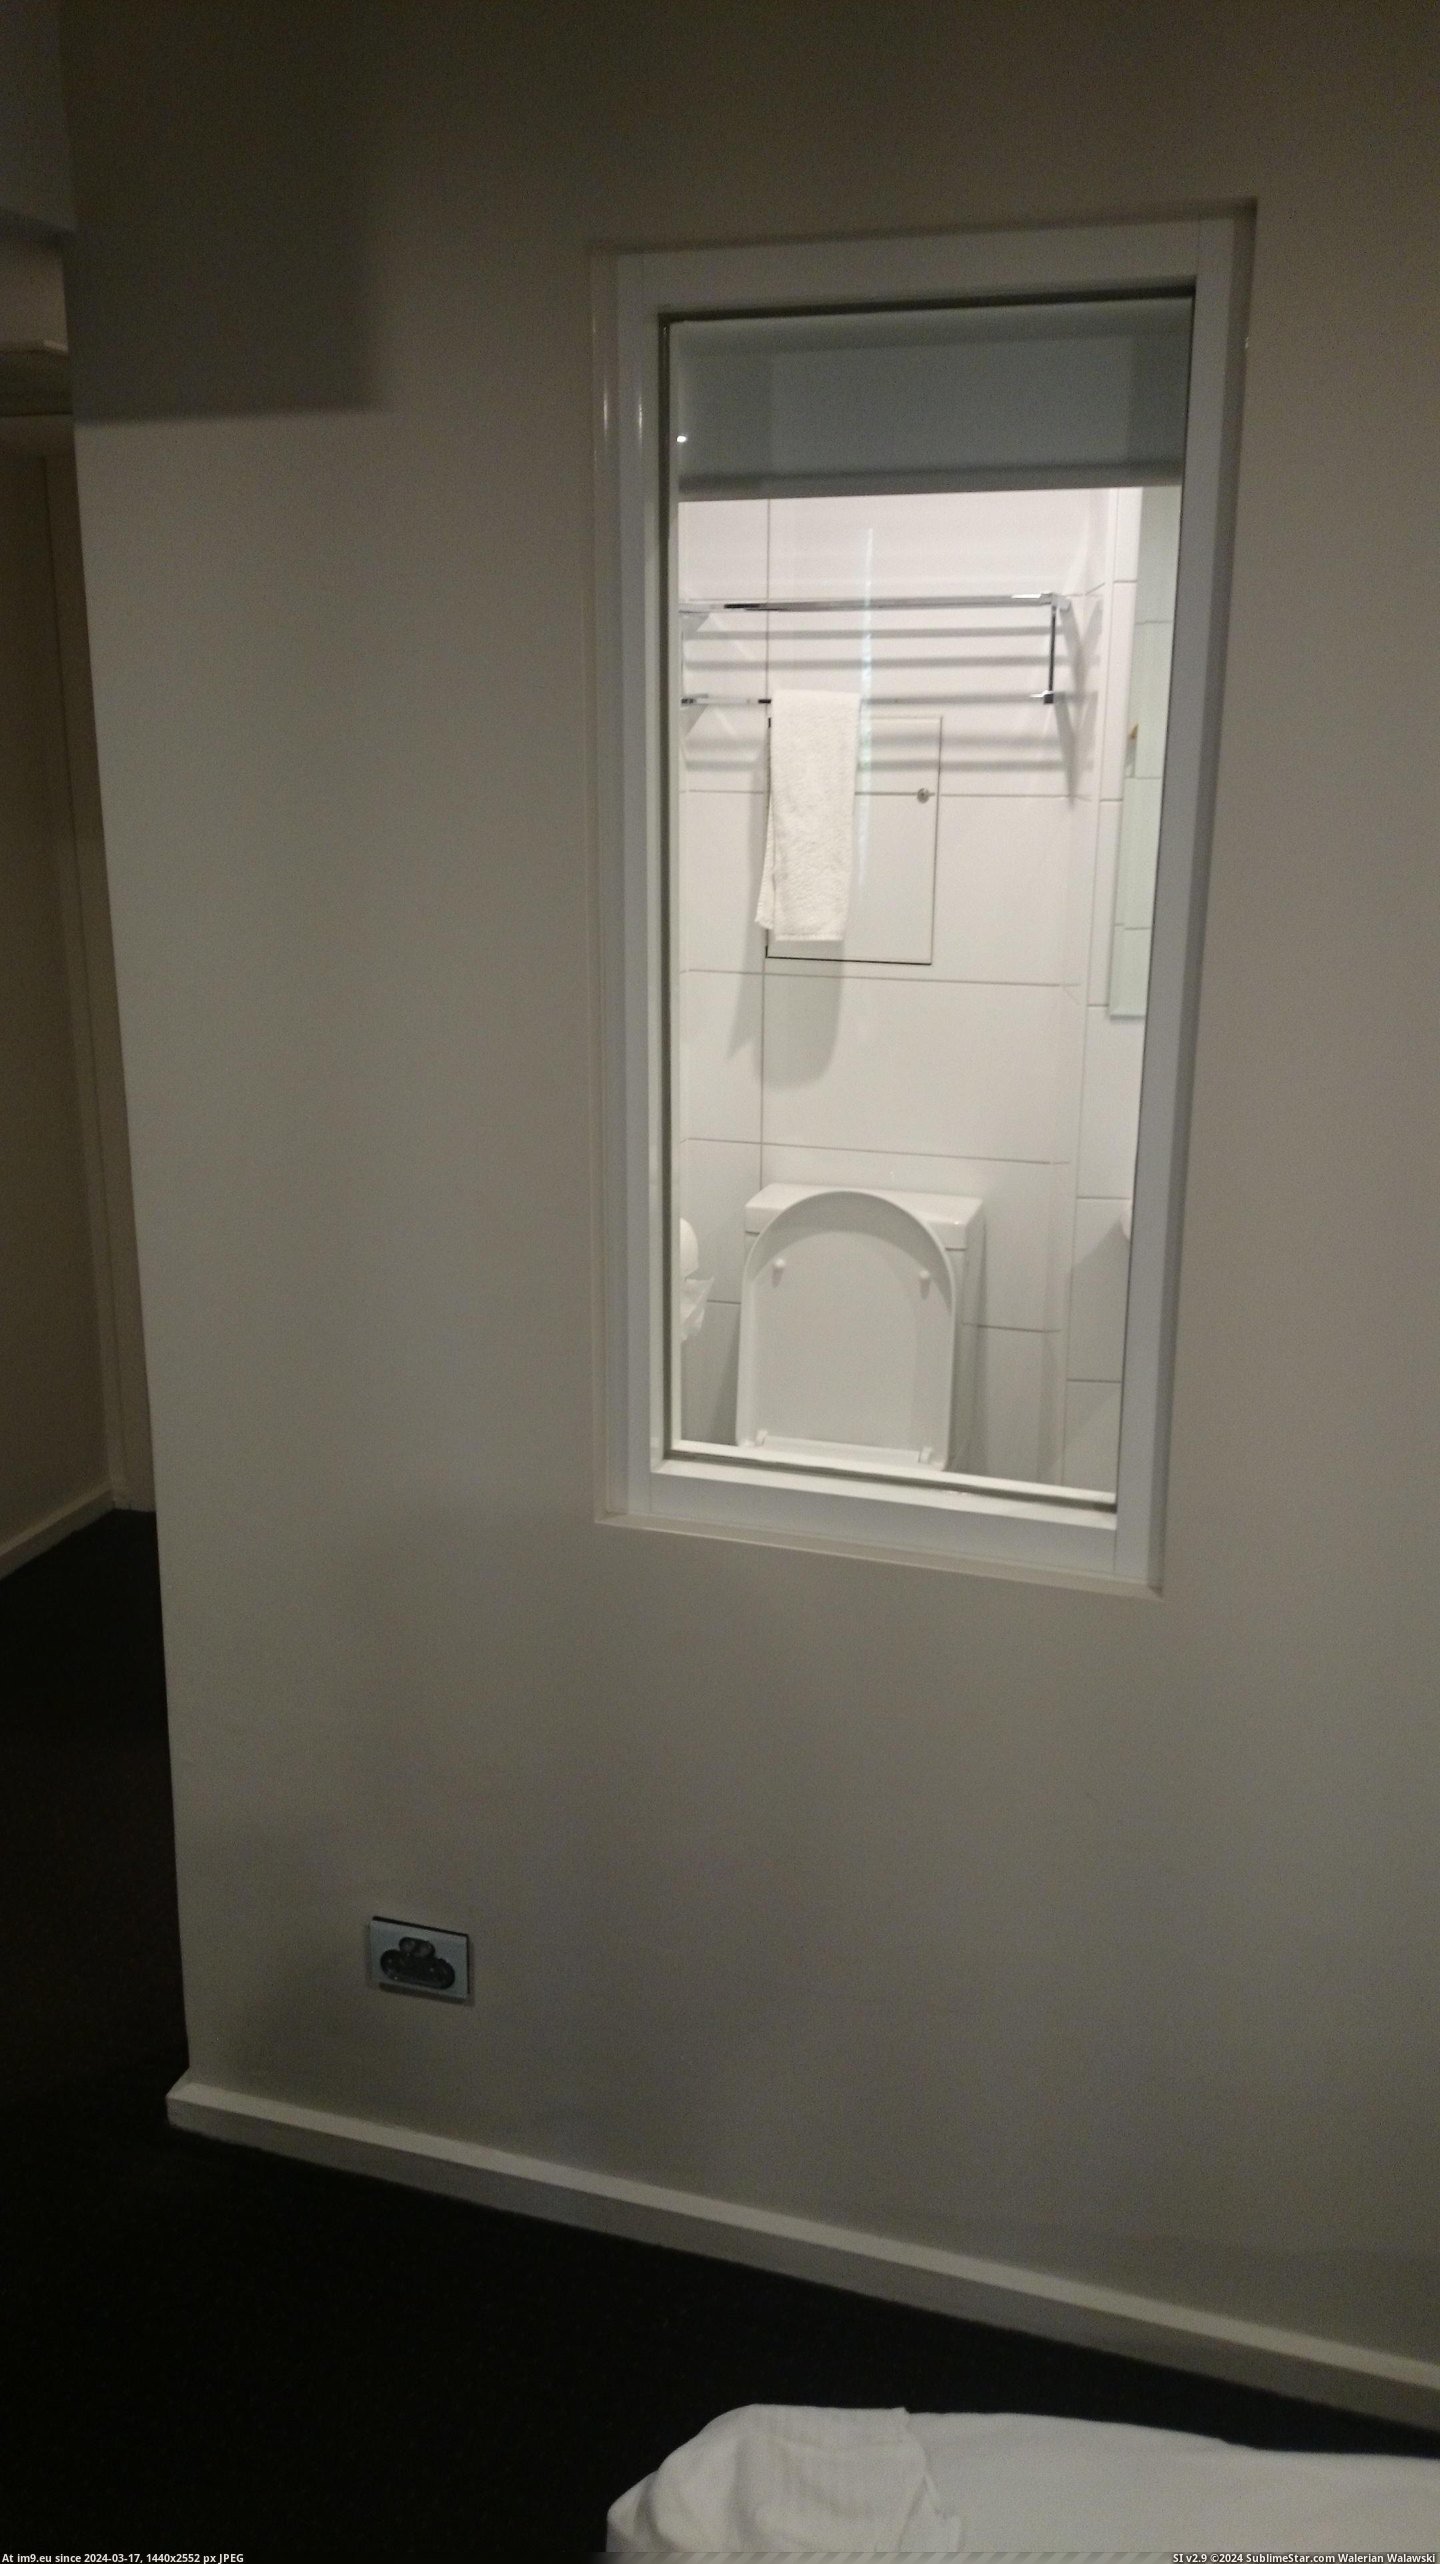 #Room #Window #Toilet #Hotel [Mildlyinteresting] My hotel room has a window to the toilet inside it Pic. (Bild von album My r/MILDLYINTERESTING favs))